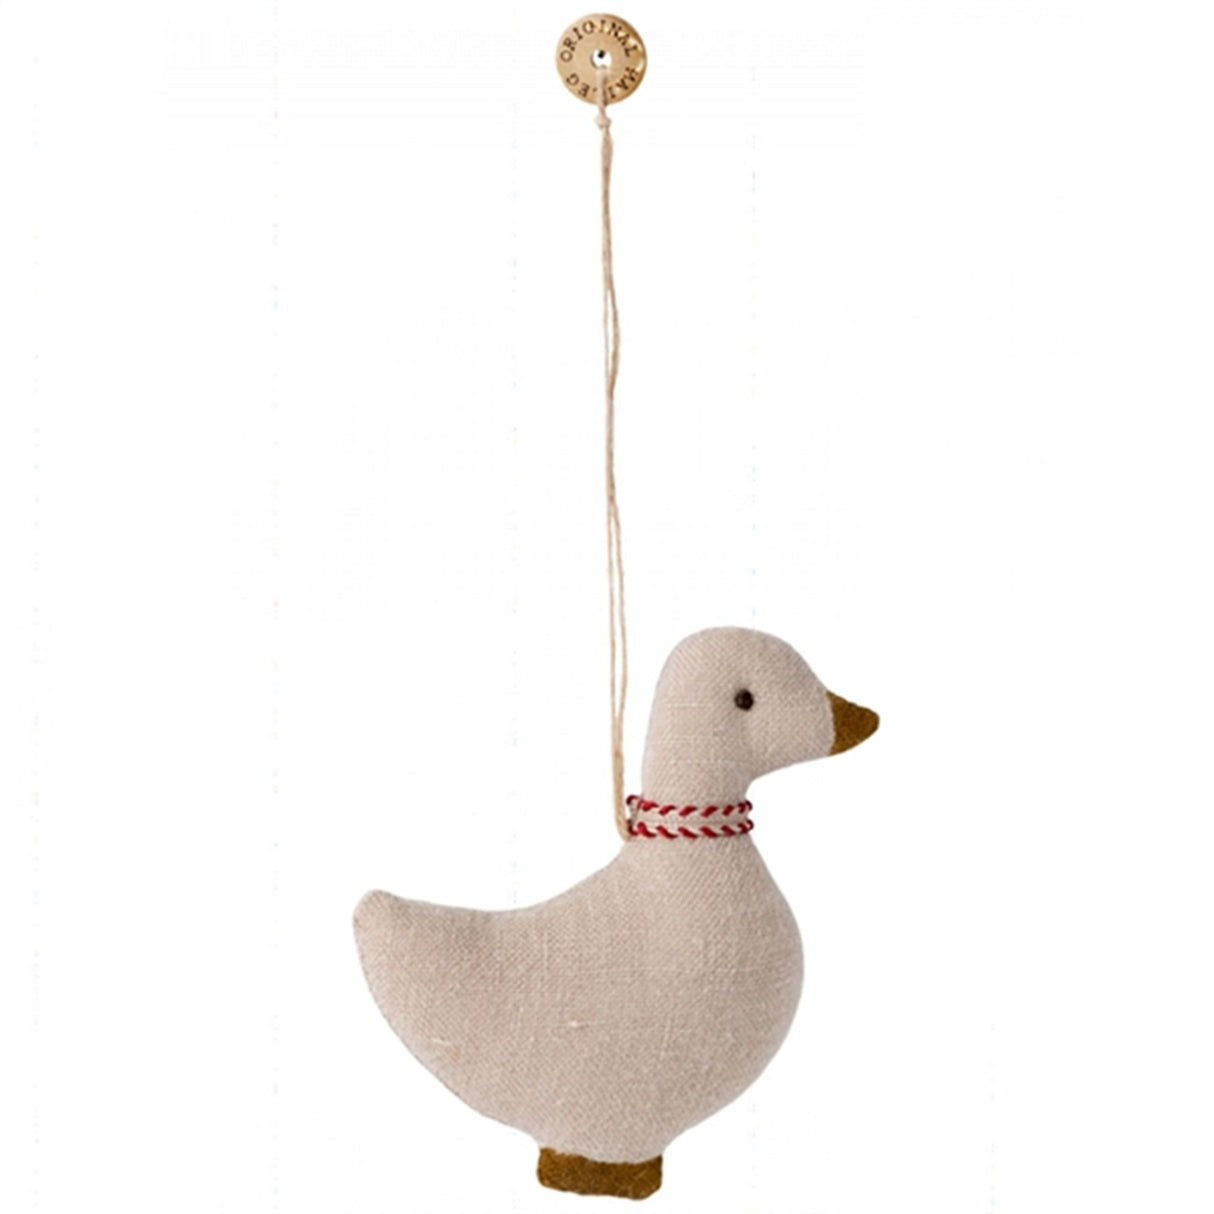 Maileg Duck Ornament, Offwhite